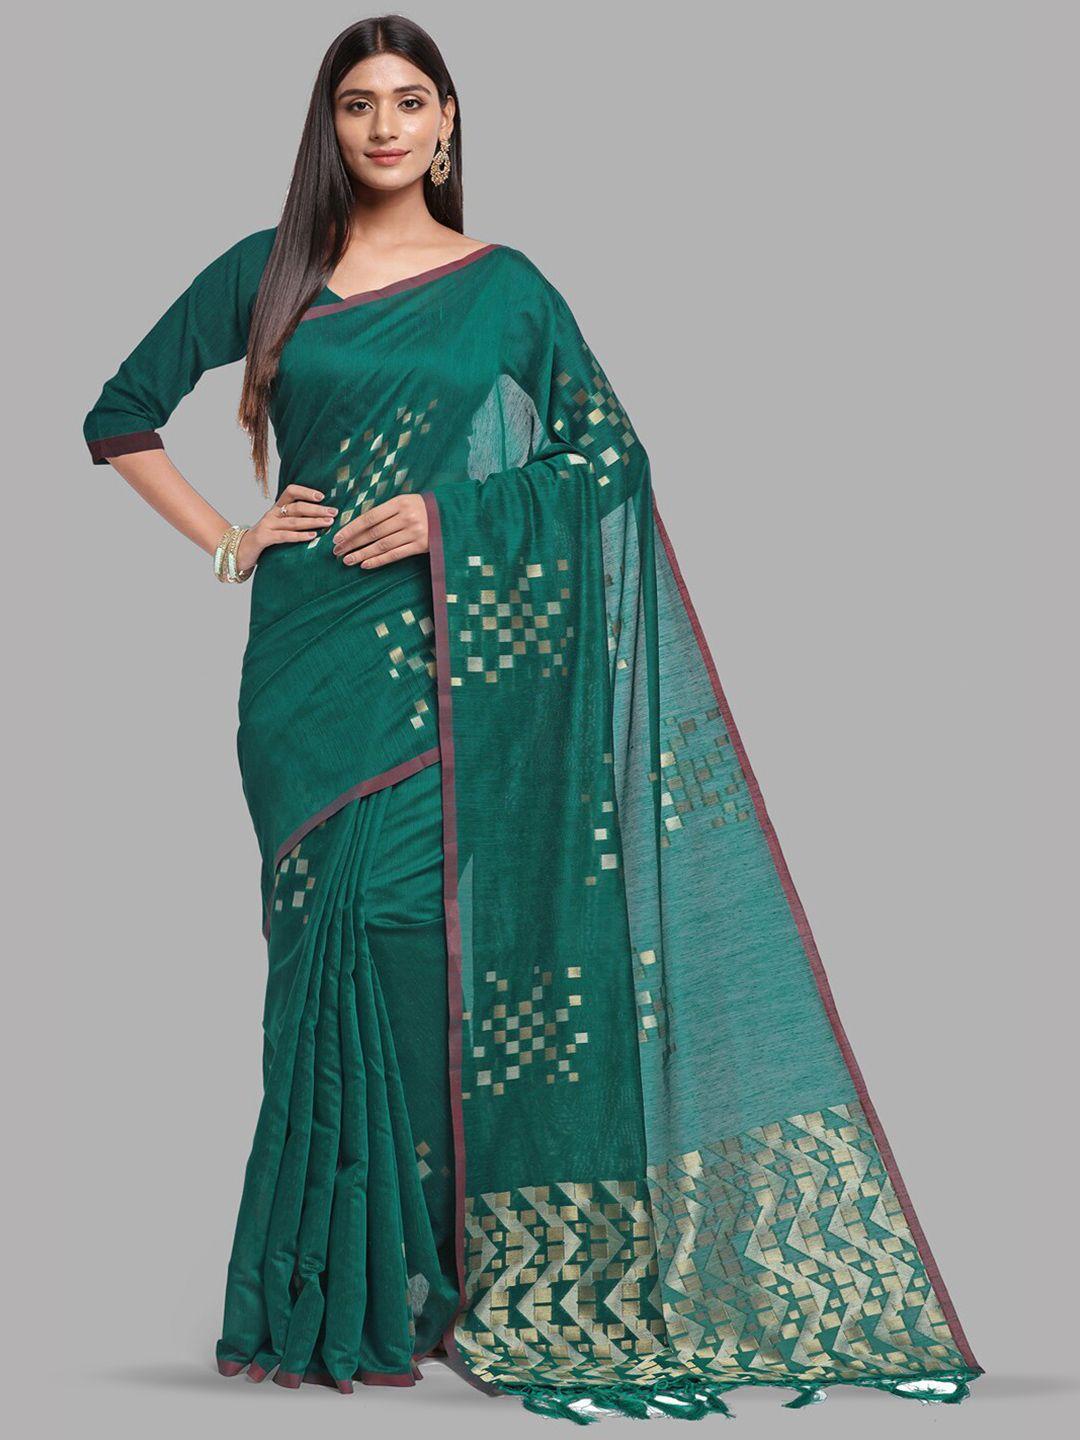 insthah geometric woven design zari detailed pure linen saree